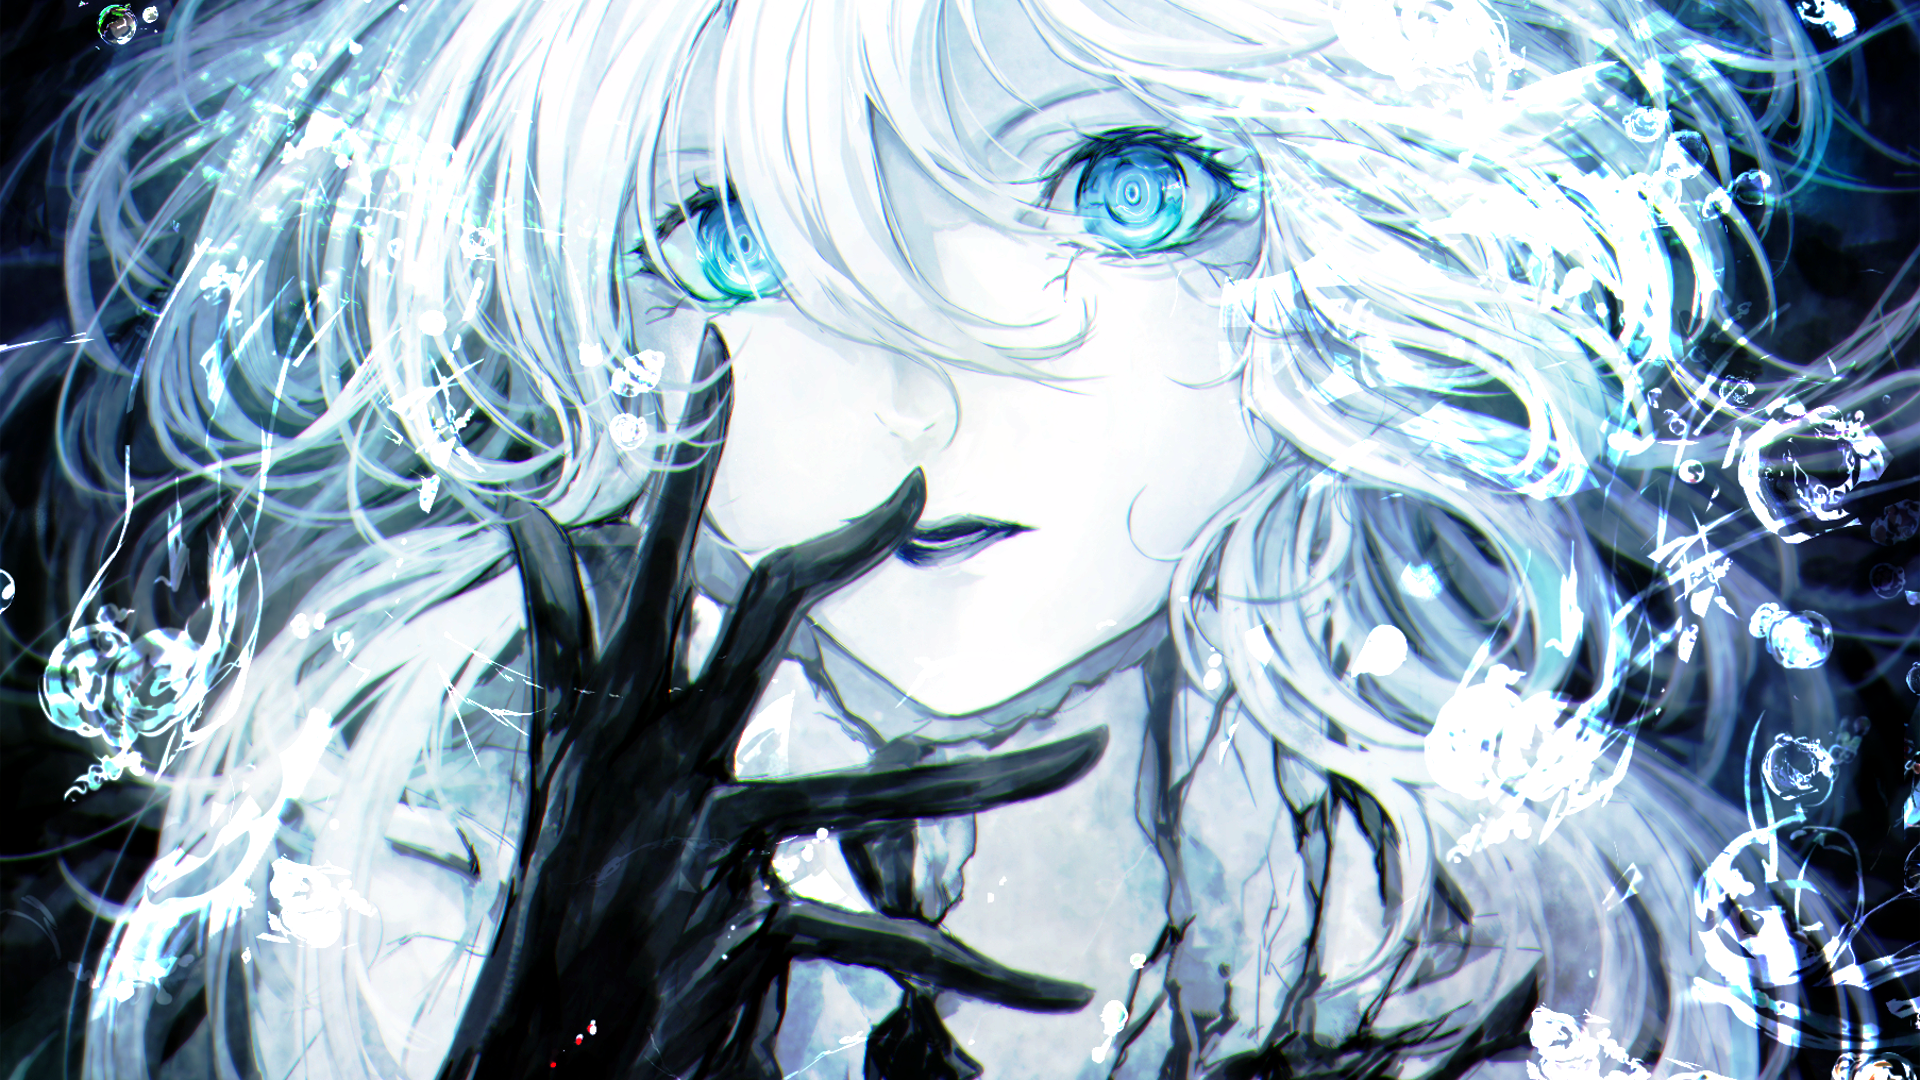 Wallpaper goku, anime art, glowing eyes and hair desktop wallpaper, hd  image, picture, background, bd1f8f